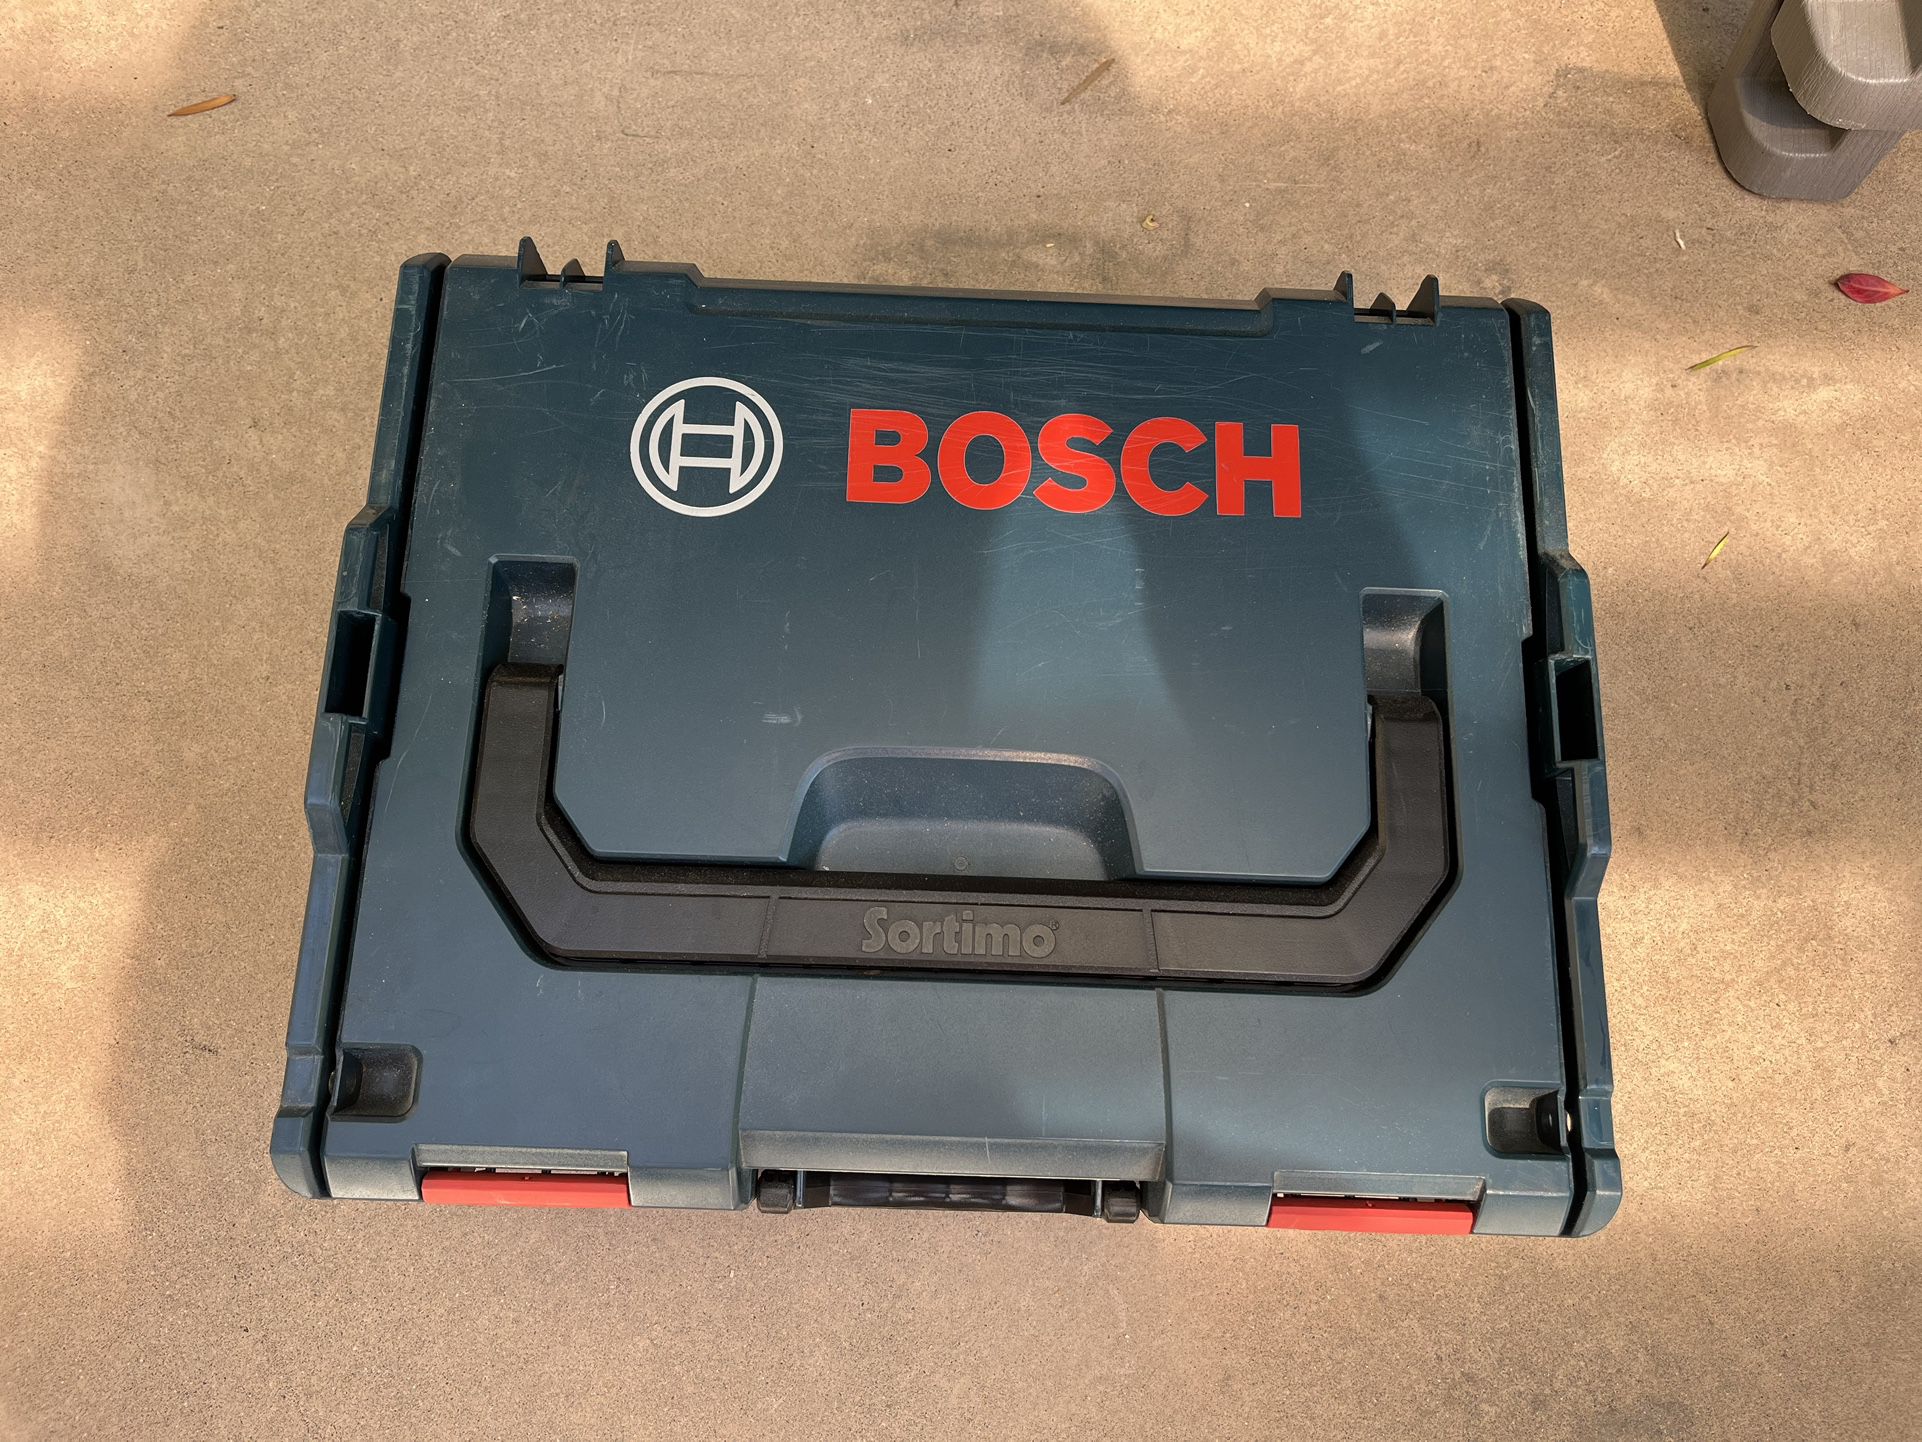 Bosch L-BOXX Stackable w/ Drill Insert